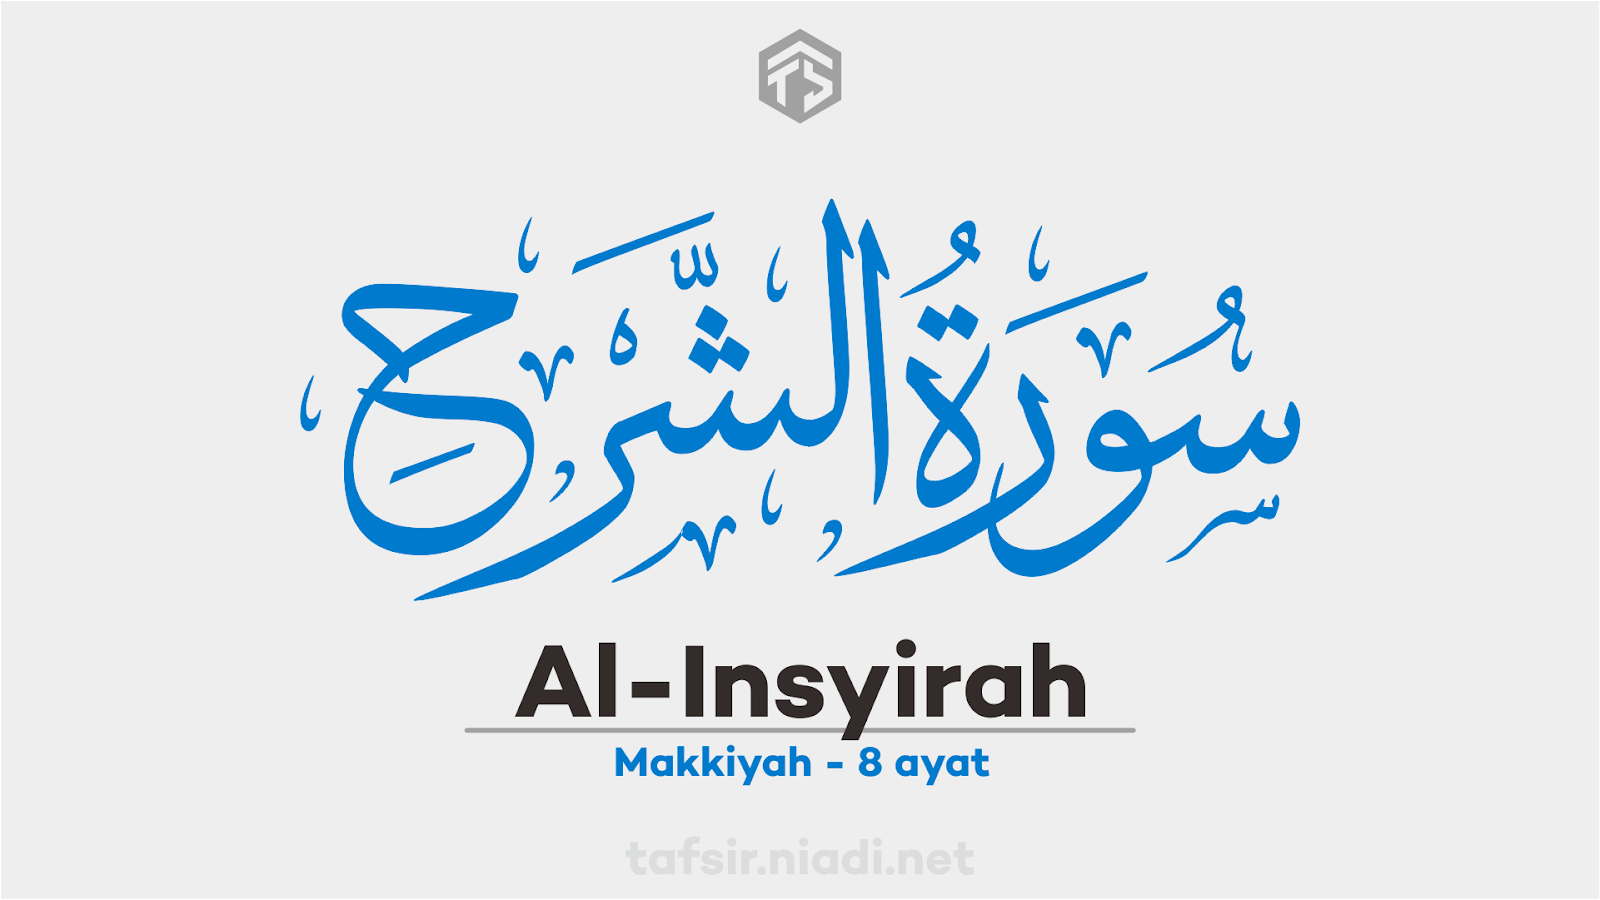 Tafsir Alquran Surah Al-Insyirah Ayat ke-5. Website Alquran online cepat, ringan, dan hemat kuota, lengkap dengan teks arab, latin, terjemah, dan tafsir bahasa Indonesia - tafsir.niadi.net